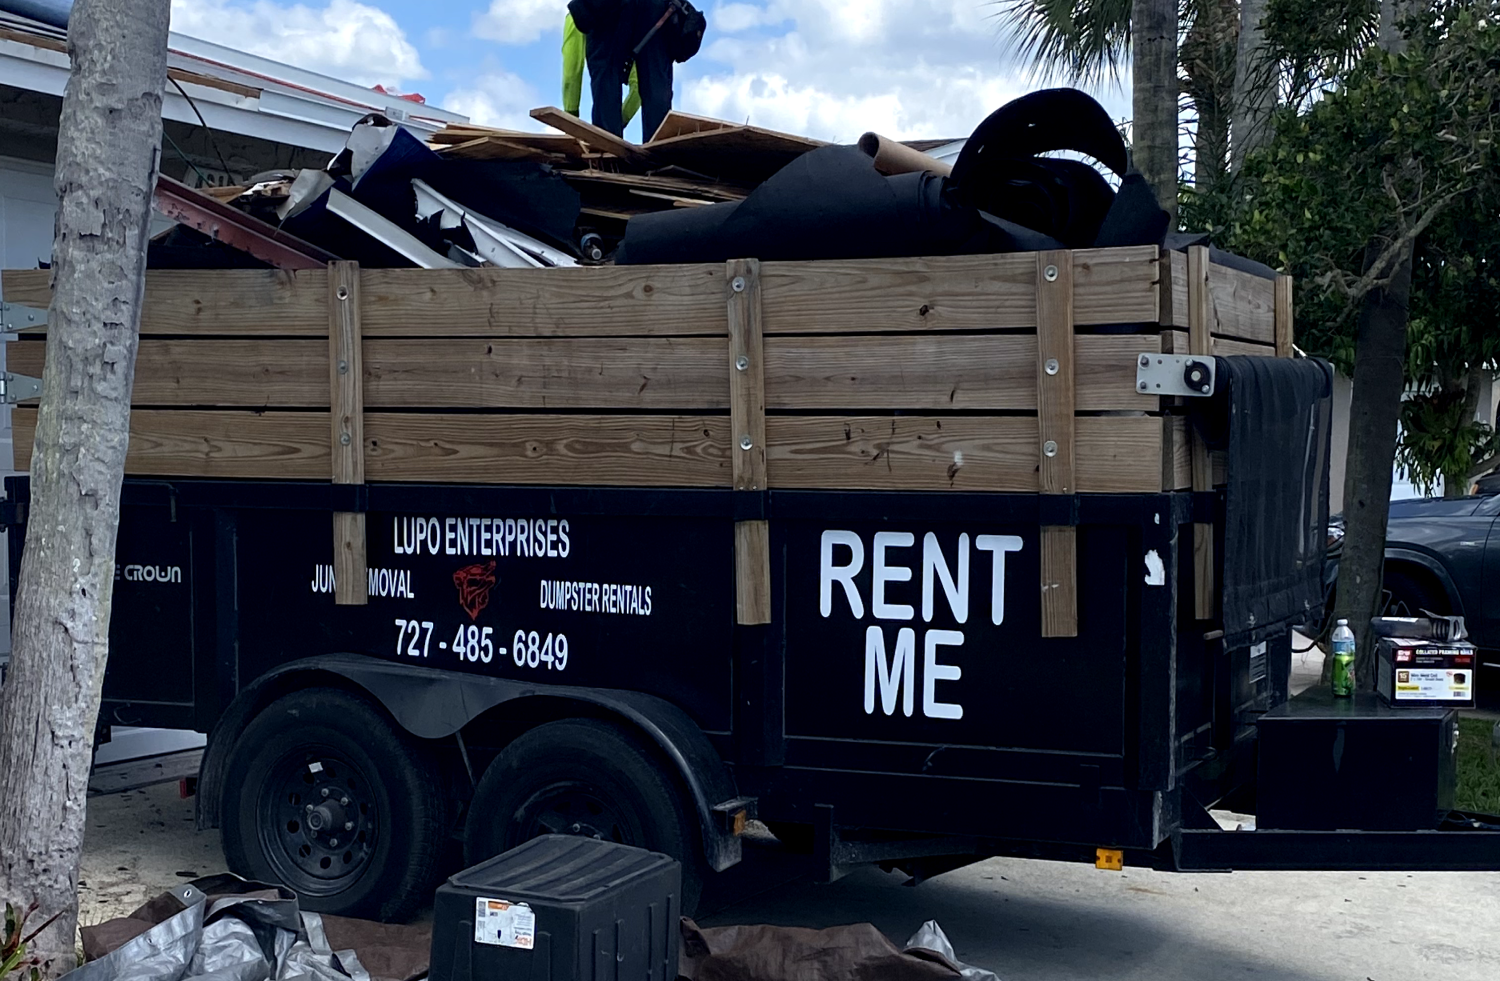 Dumpster rental service in Tampa Bay